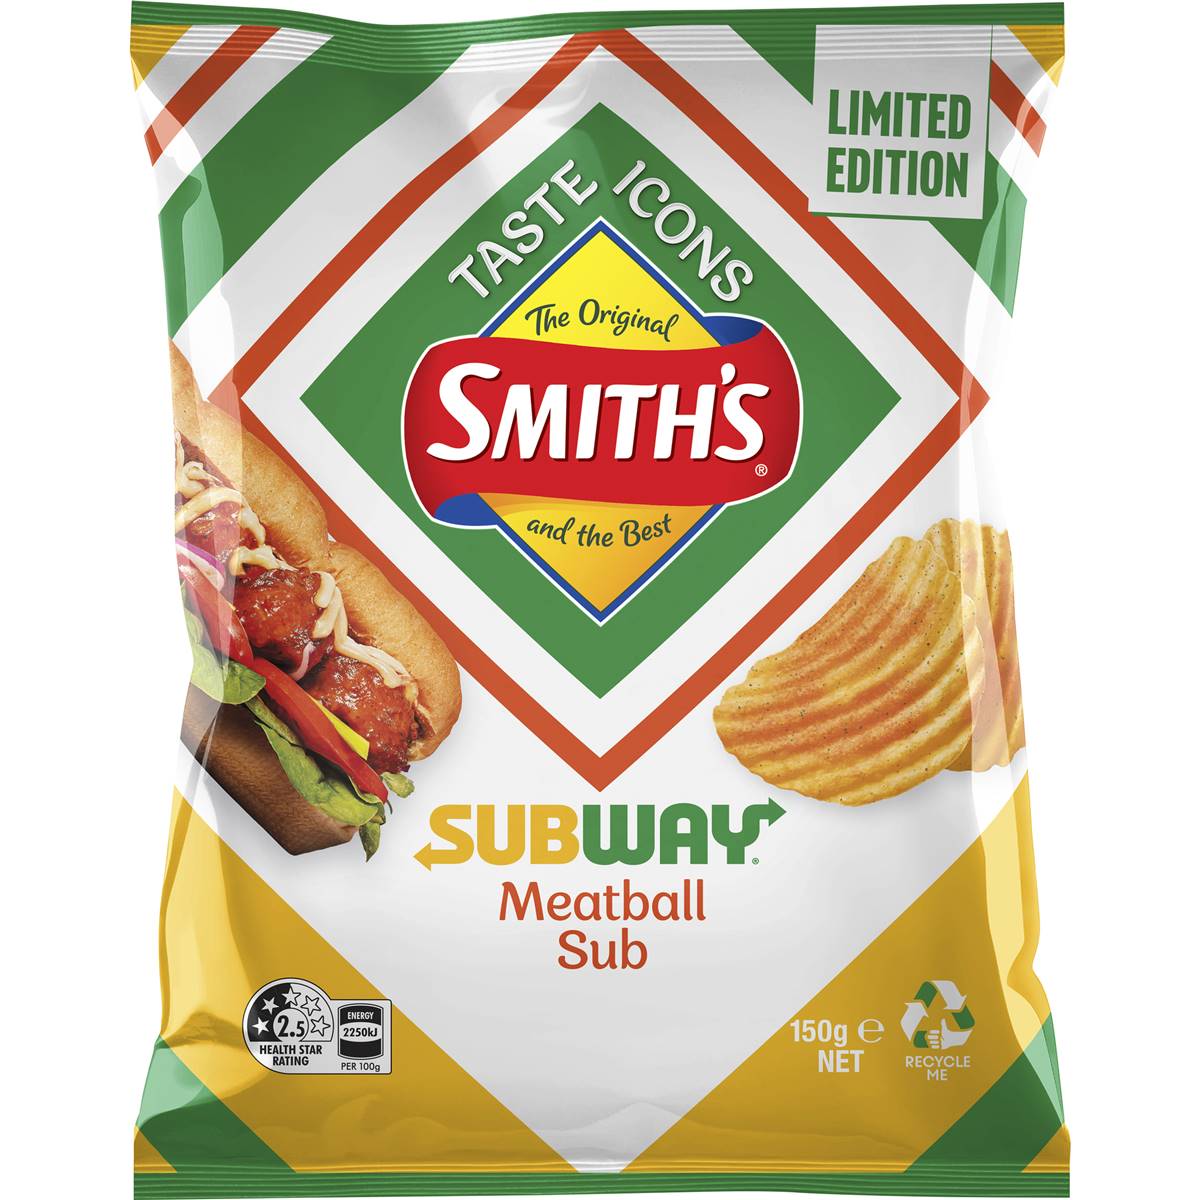 Smith's Subway Meatball Sub Limited Edition Australia